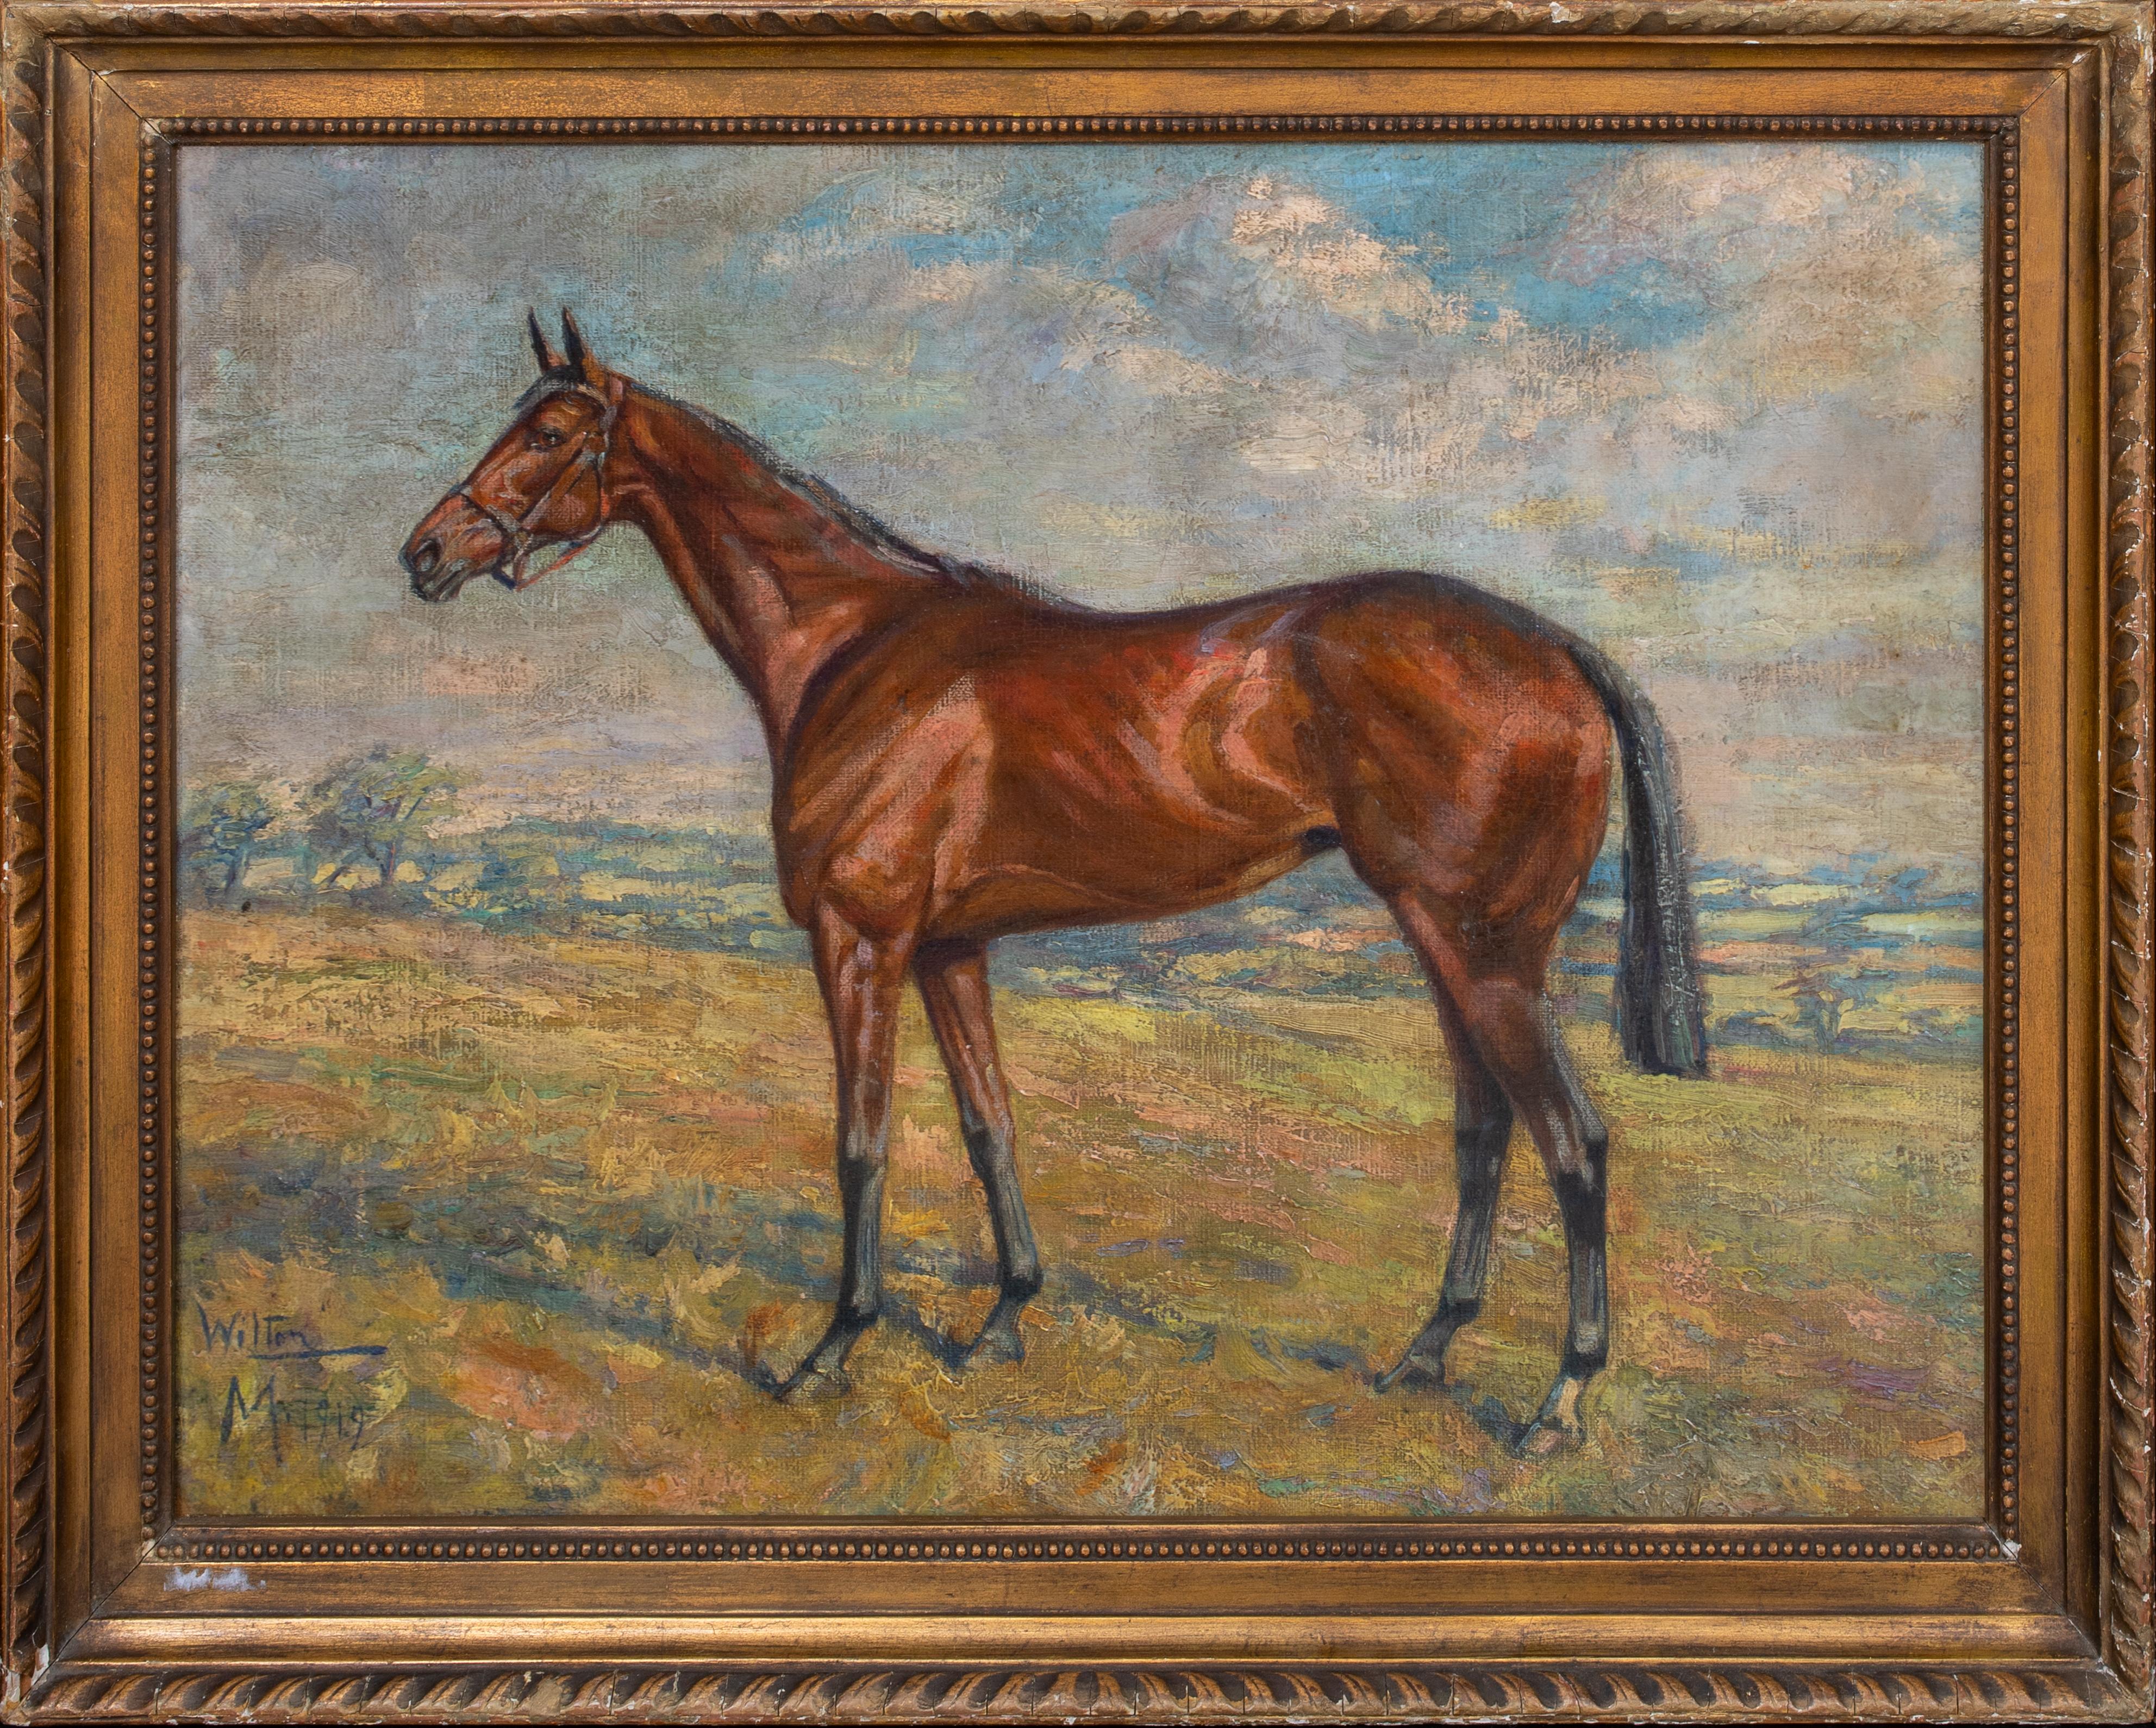 Margaret Collyer Portrait Painting - Portrait Of A Racehorse "Wilton", dated 1919   by Margaret H. COLLYER 1872-1945